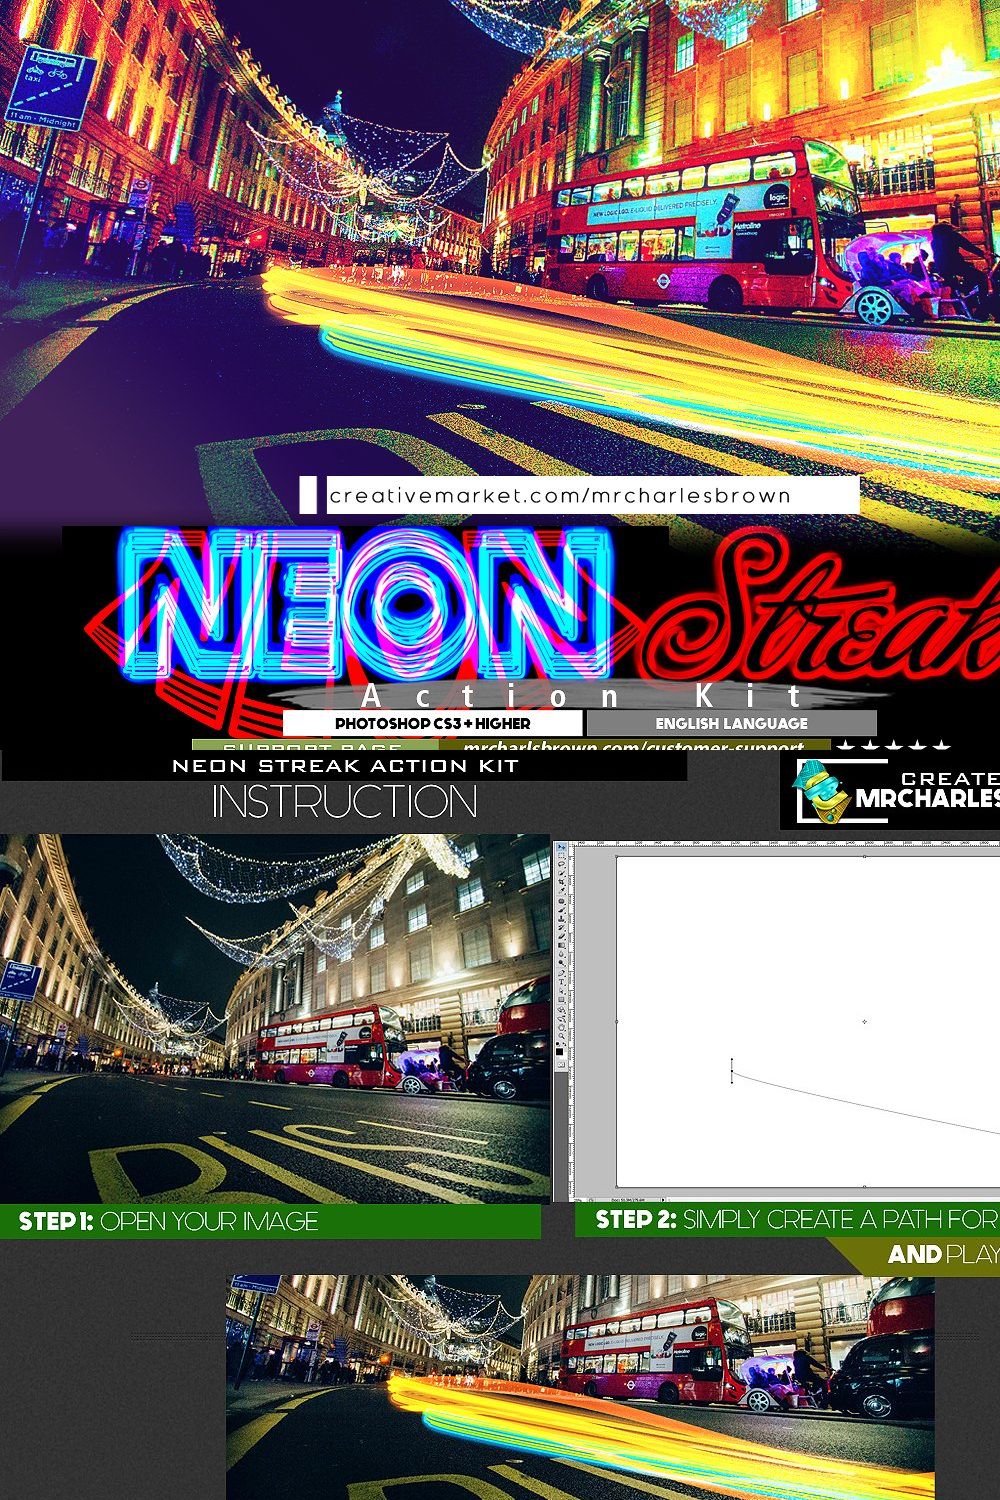 Neon Streak Action Kit pinterest preview image.